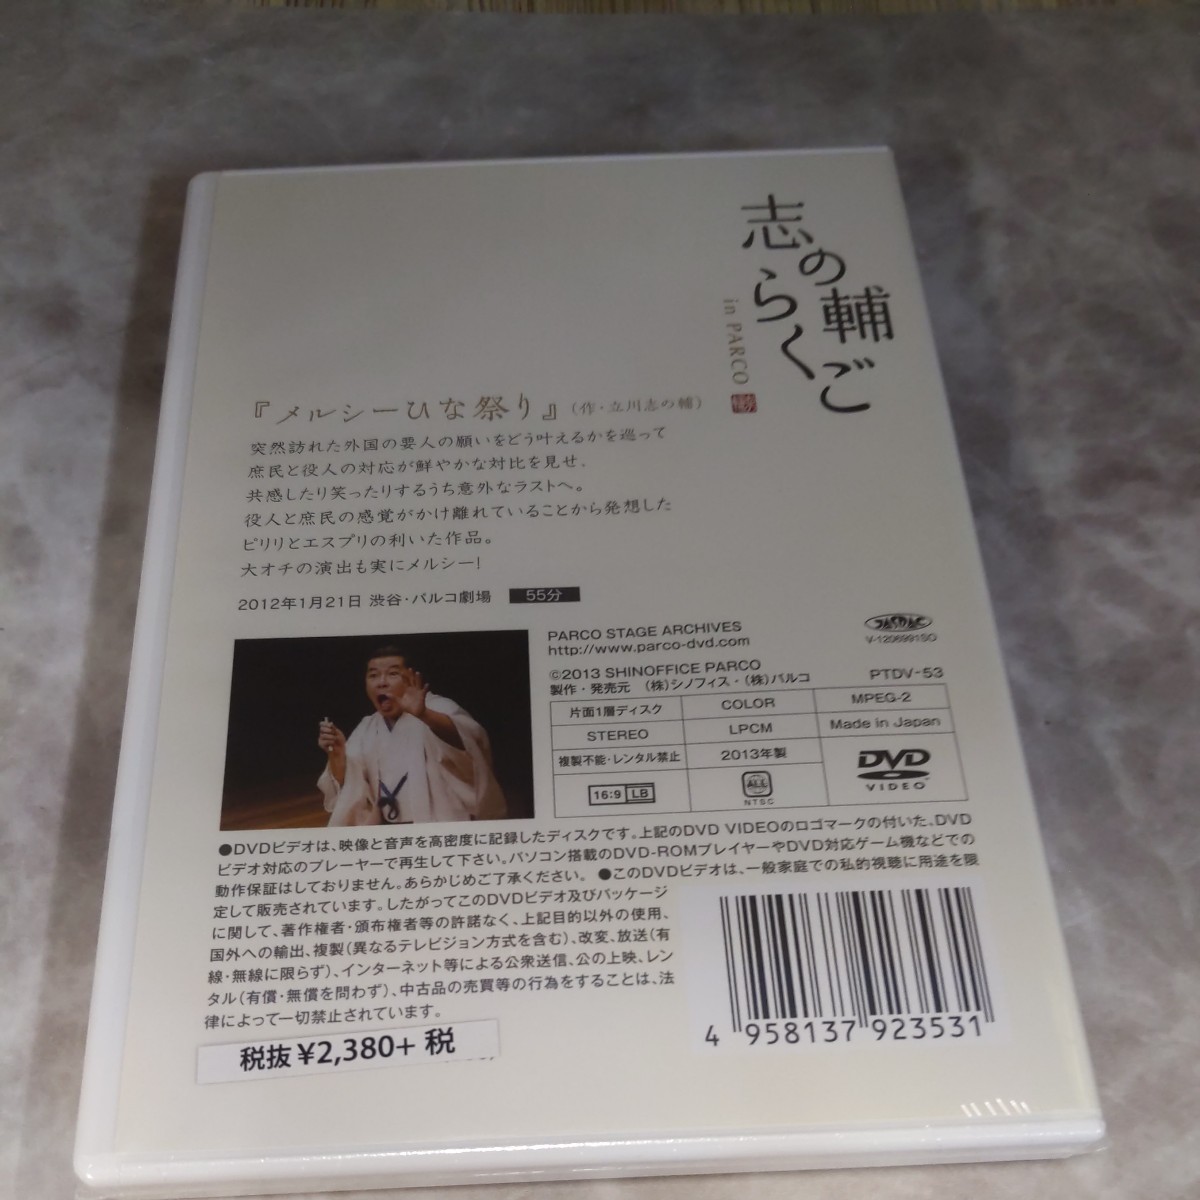 paX213 new goods unopened DVD.. ....in PARCO 2006-2012 7.merusi- Hinamatsuri [DVD]